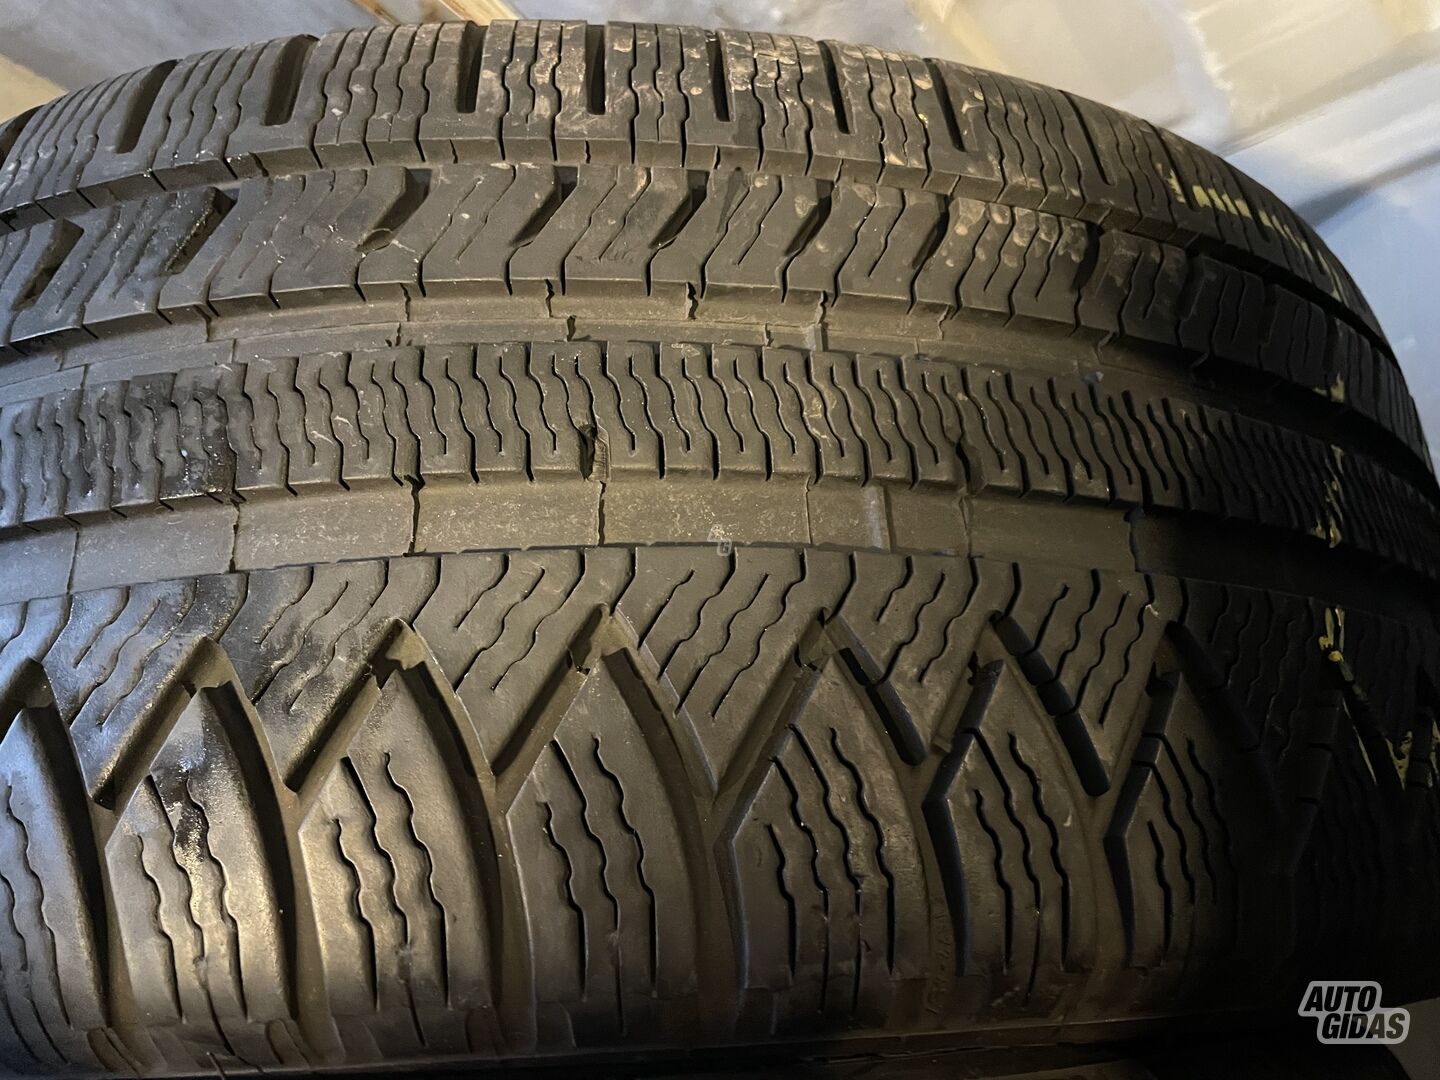 Michelin R18 winter tyres passanger car